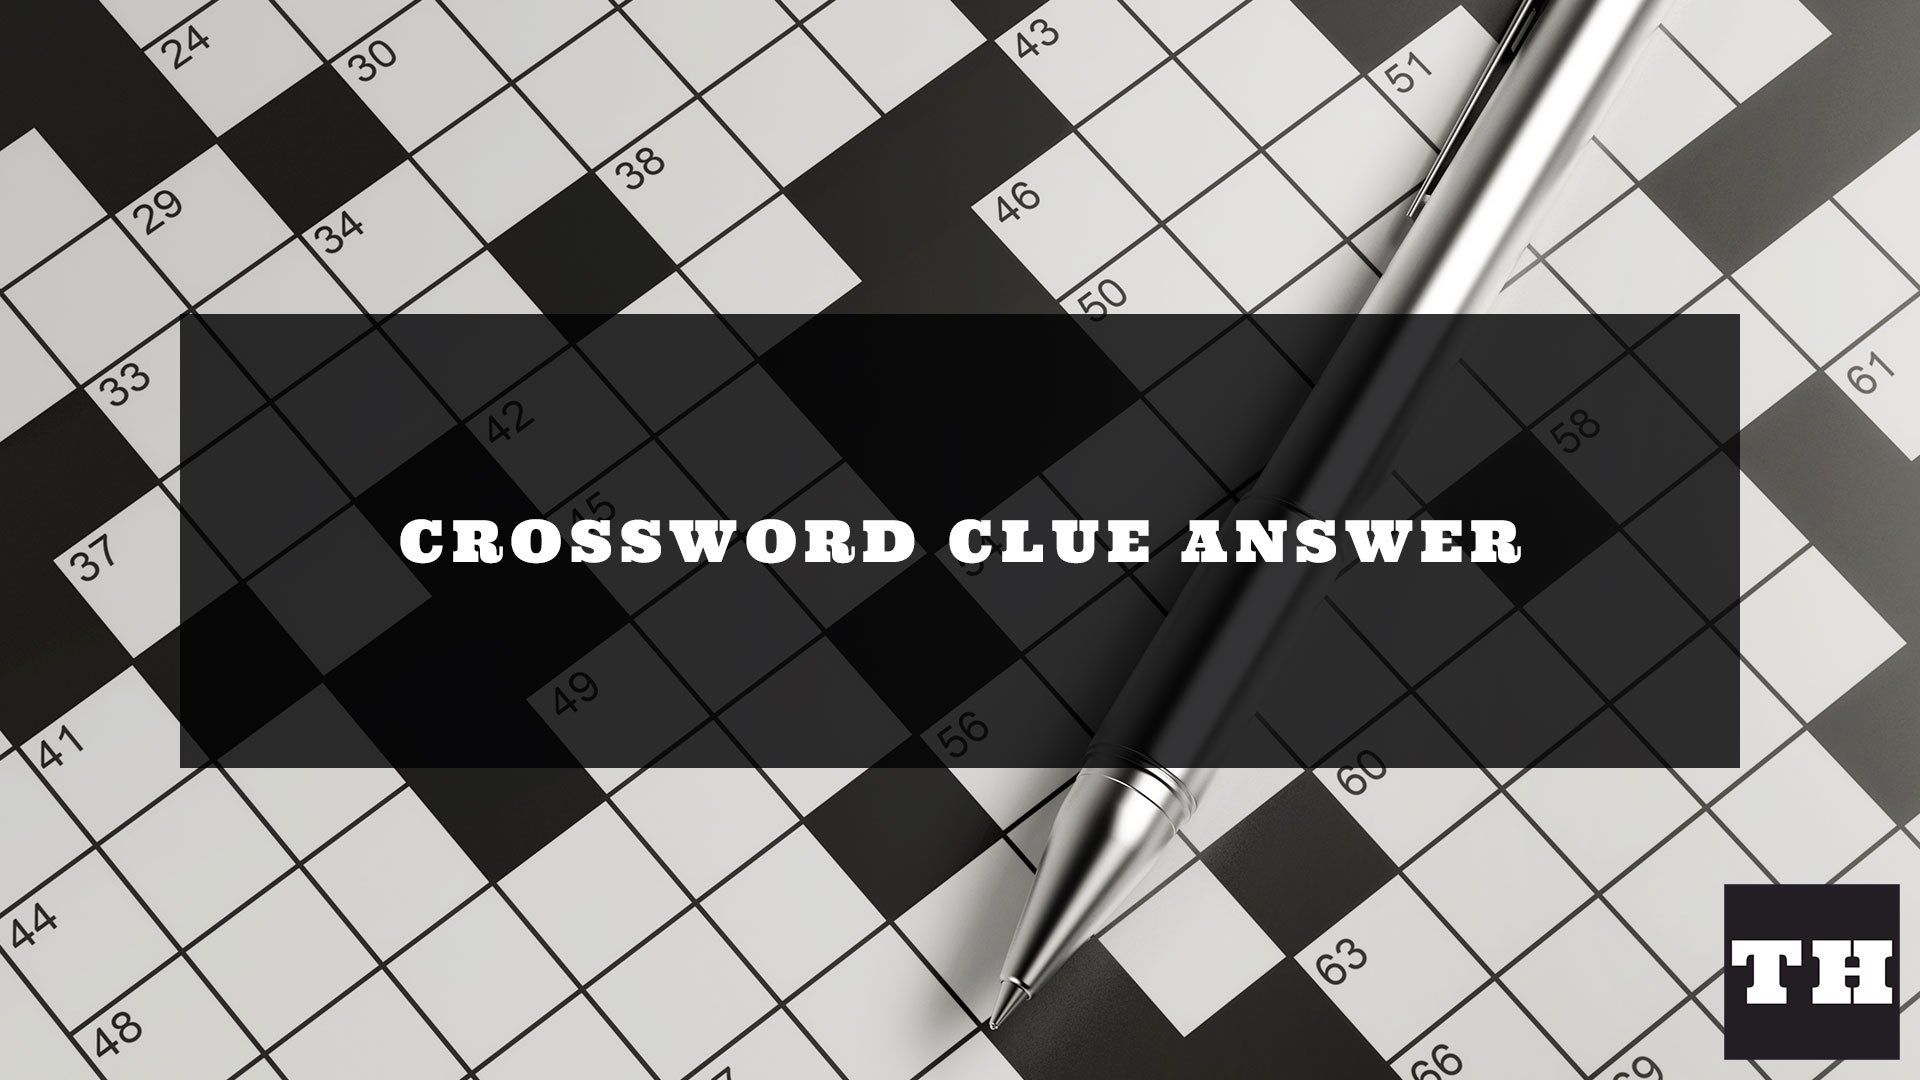 “Keep it down!” Crossword Clue